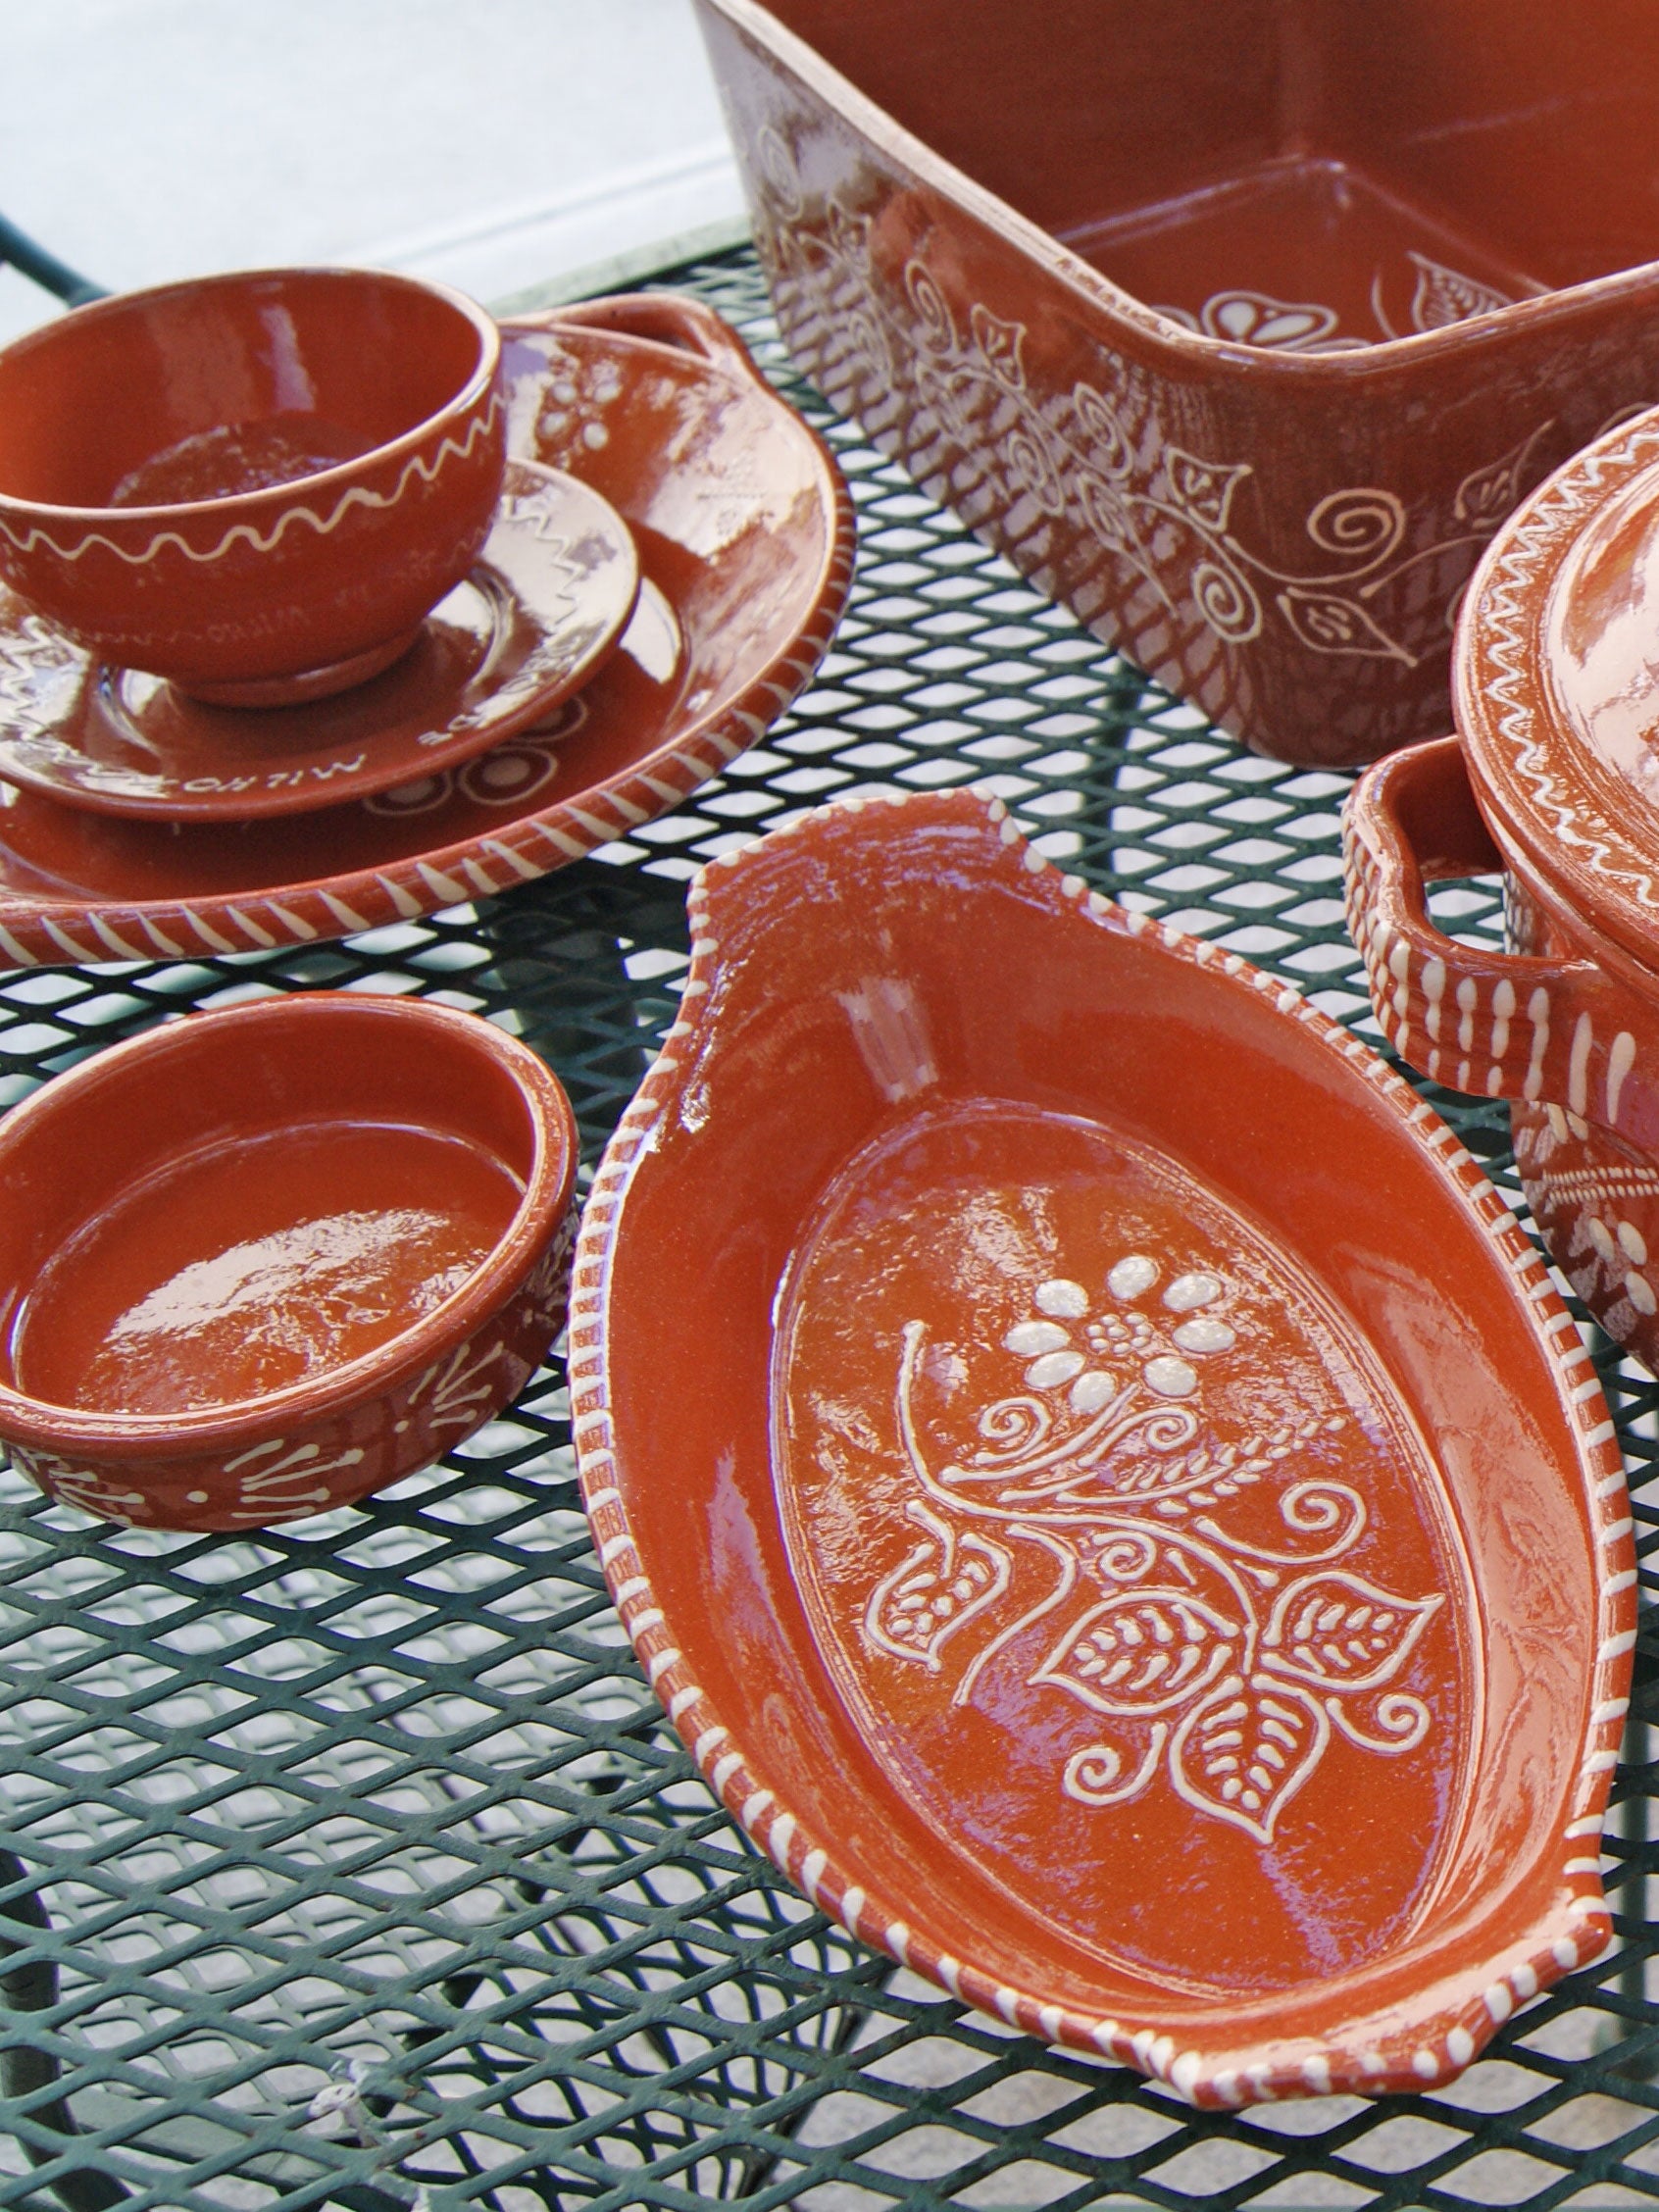 Portuguese Pottery Terracotta Glazed Clay Serving Platter